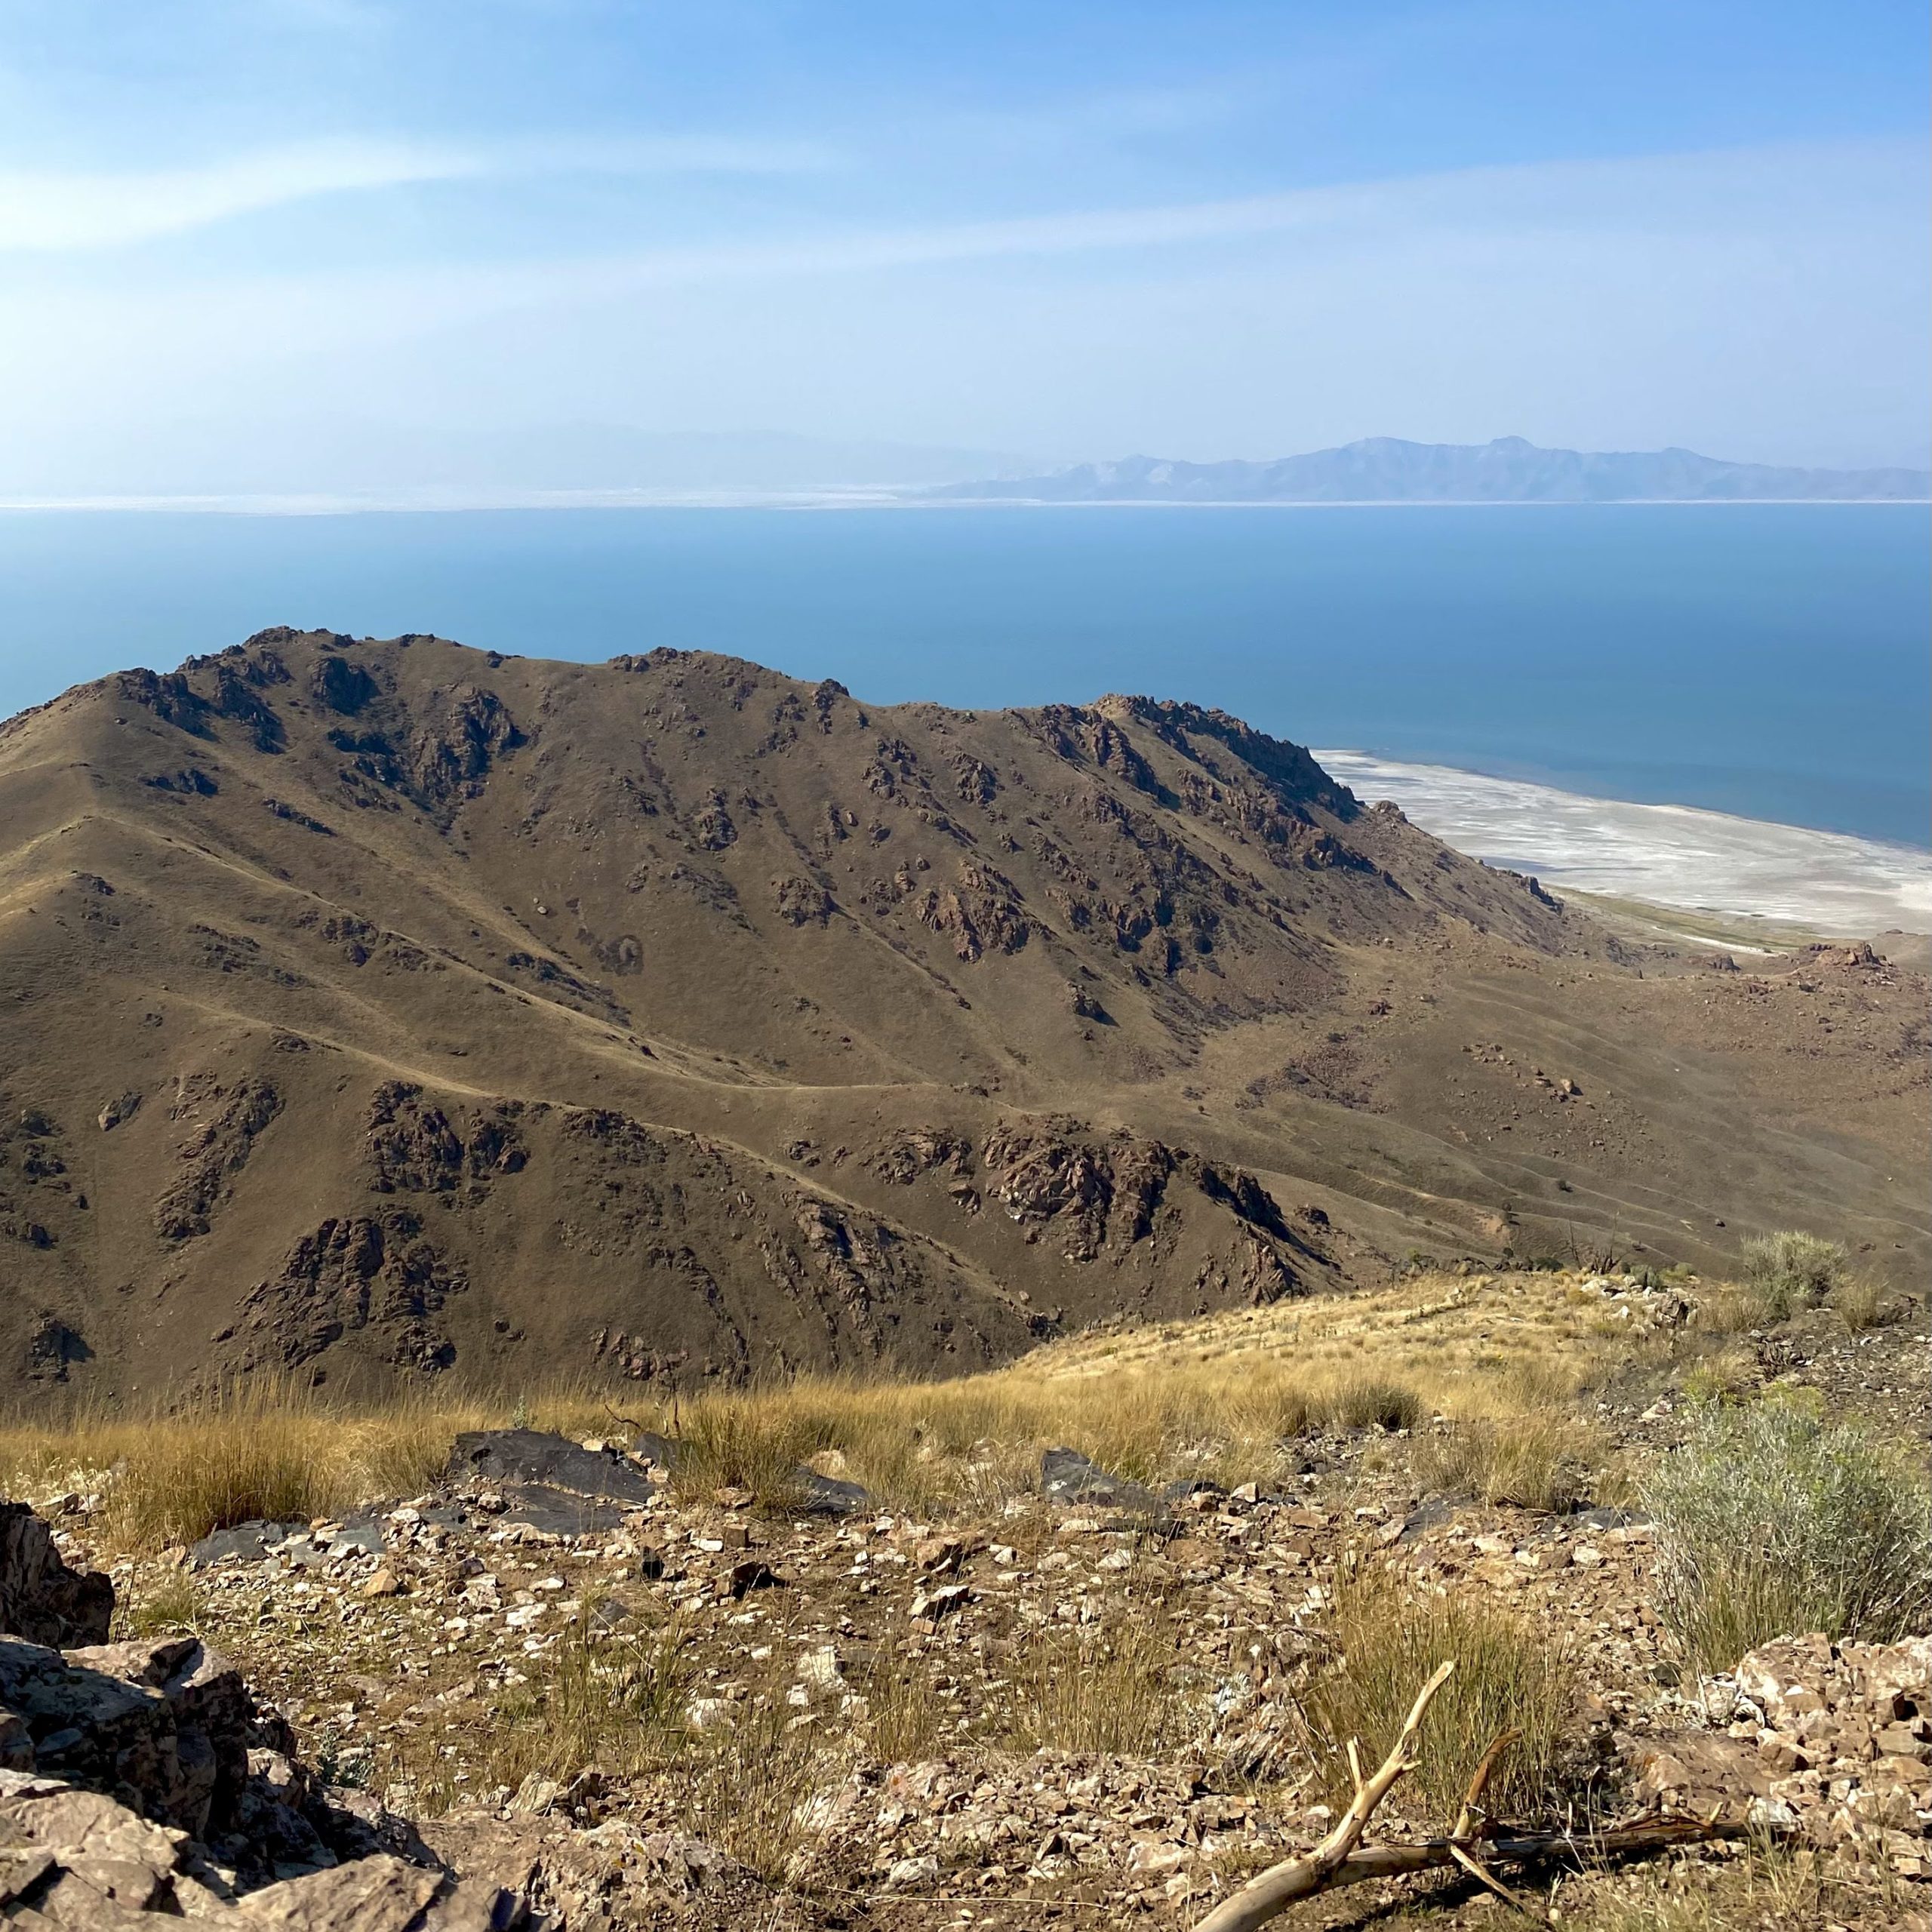 View from the Frary Peak trail on Antelope Island, Utah.